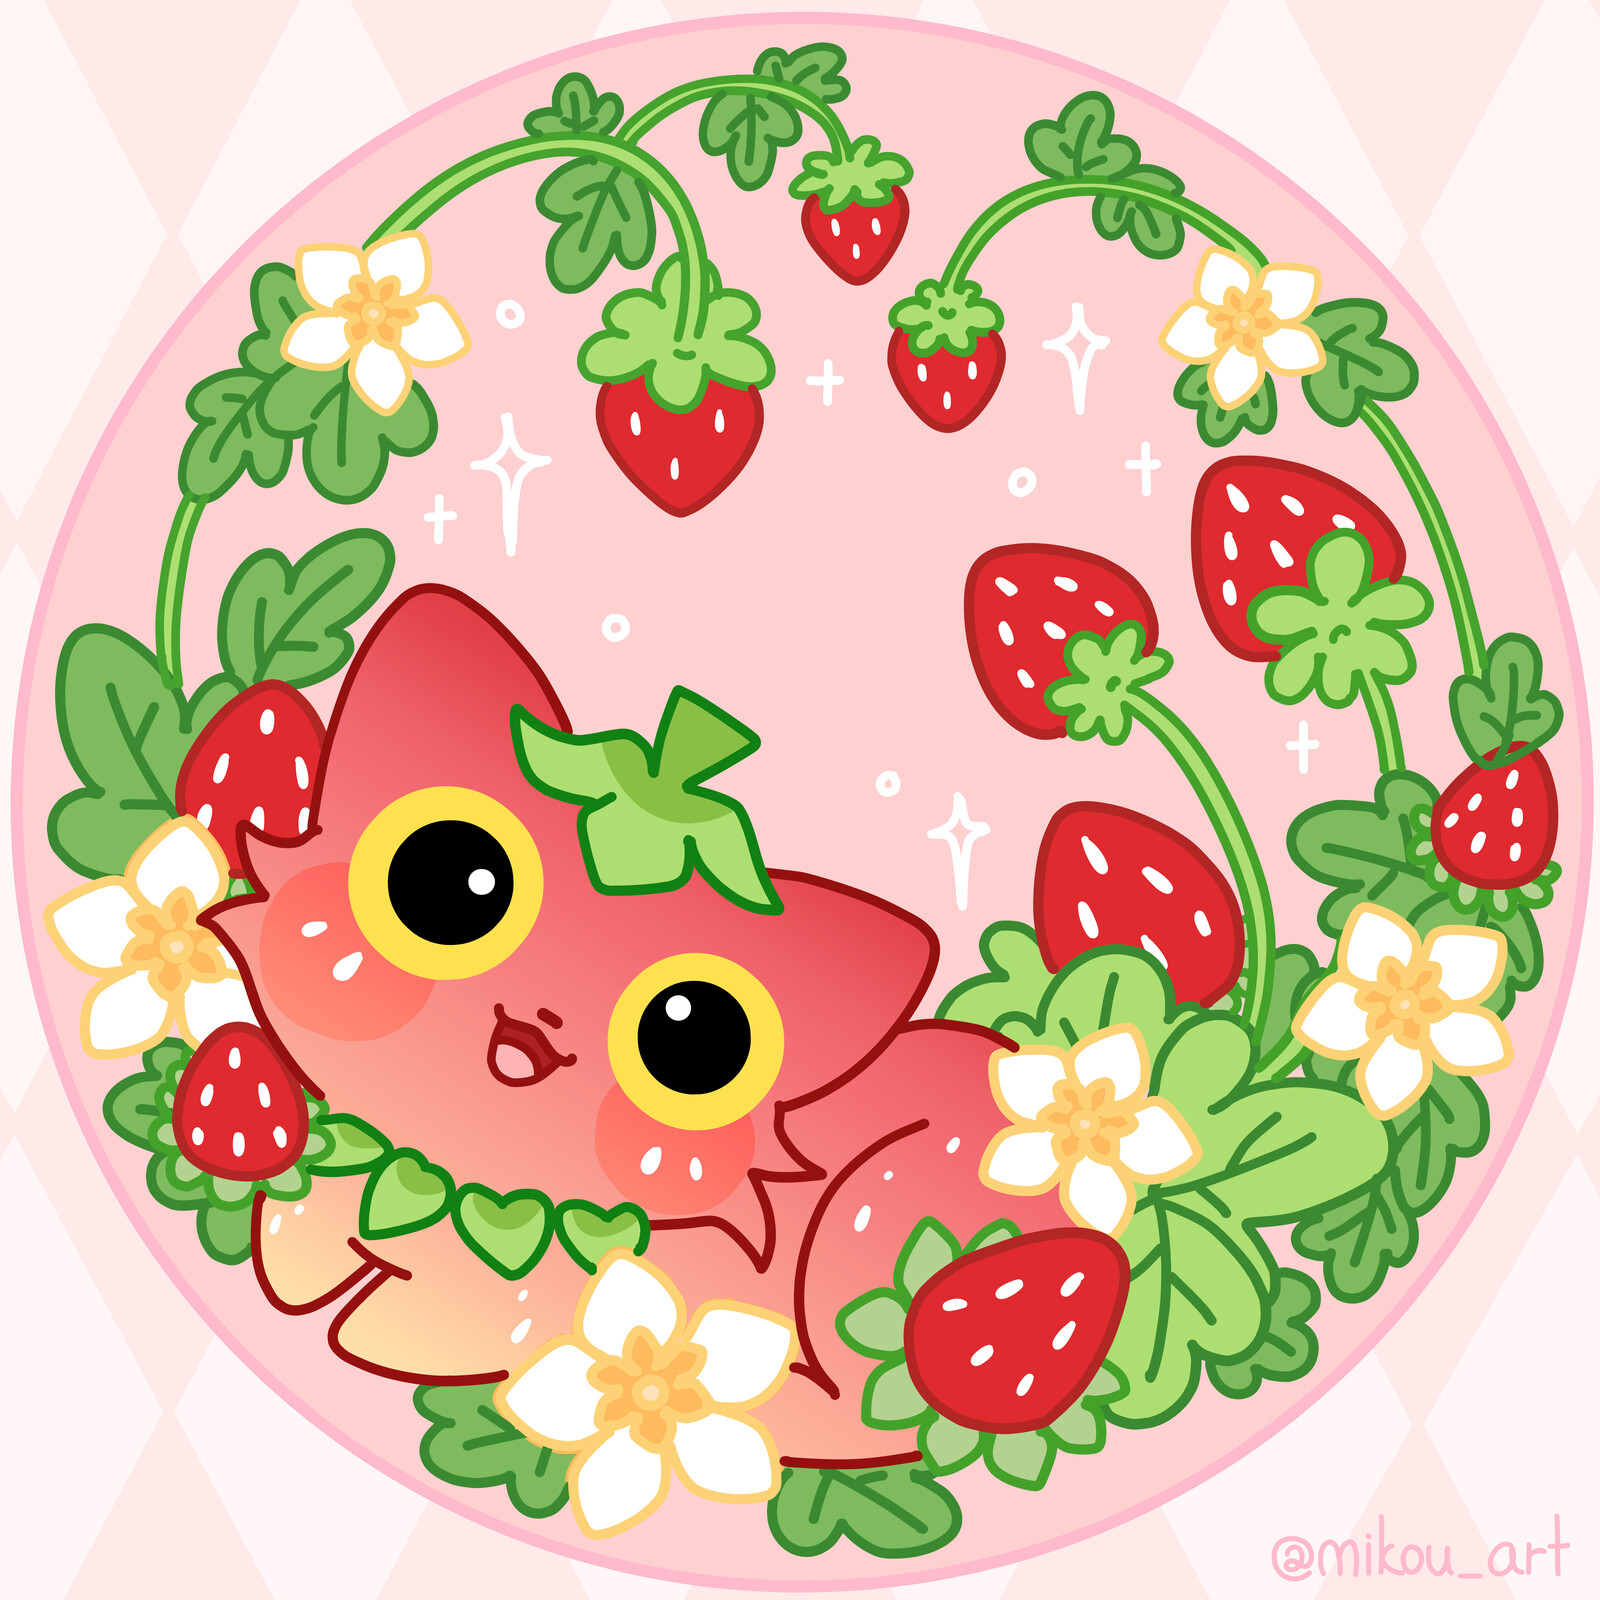  Strawberry Cat Badge and Acrylic Quicksand Coaster Design